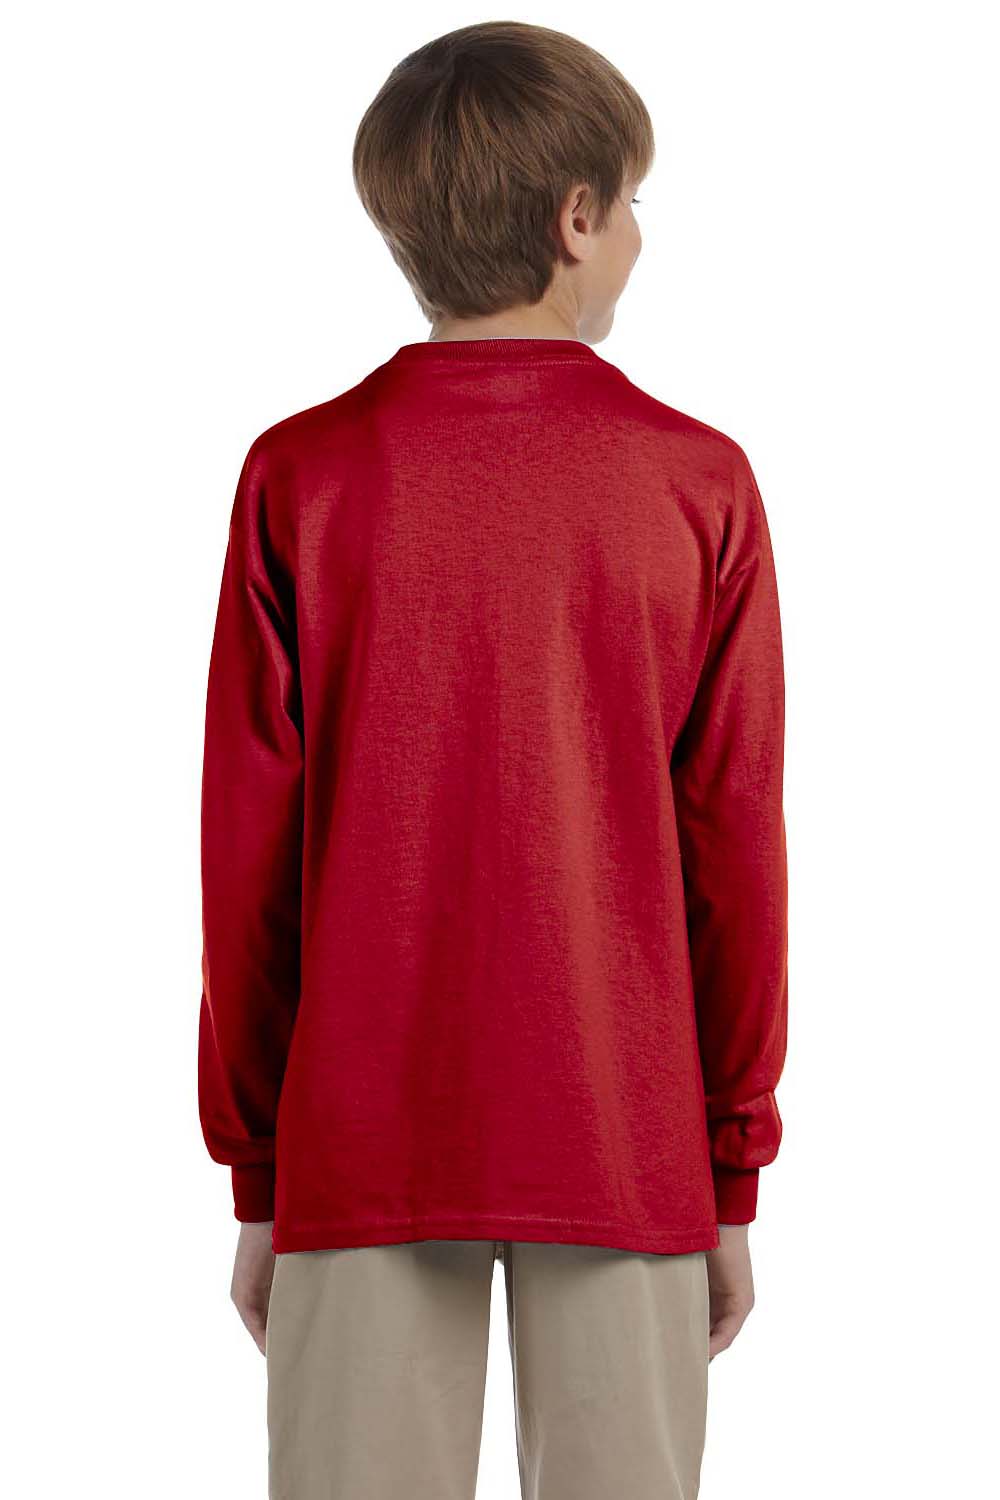 Jerzees 29BL Youth Dri-Power Moisture Wicking Long Sleeve Crewneck T-Shirt Red Back